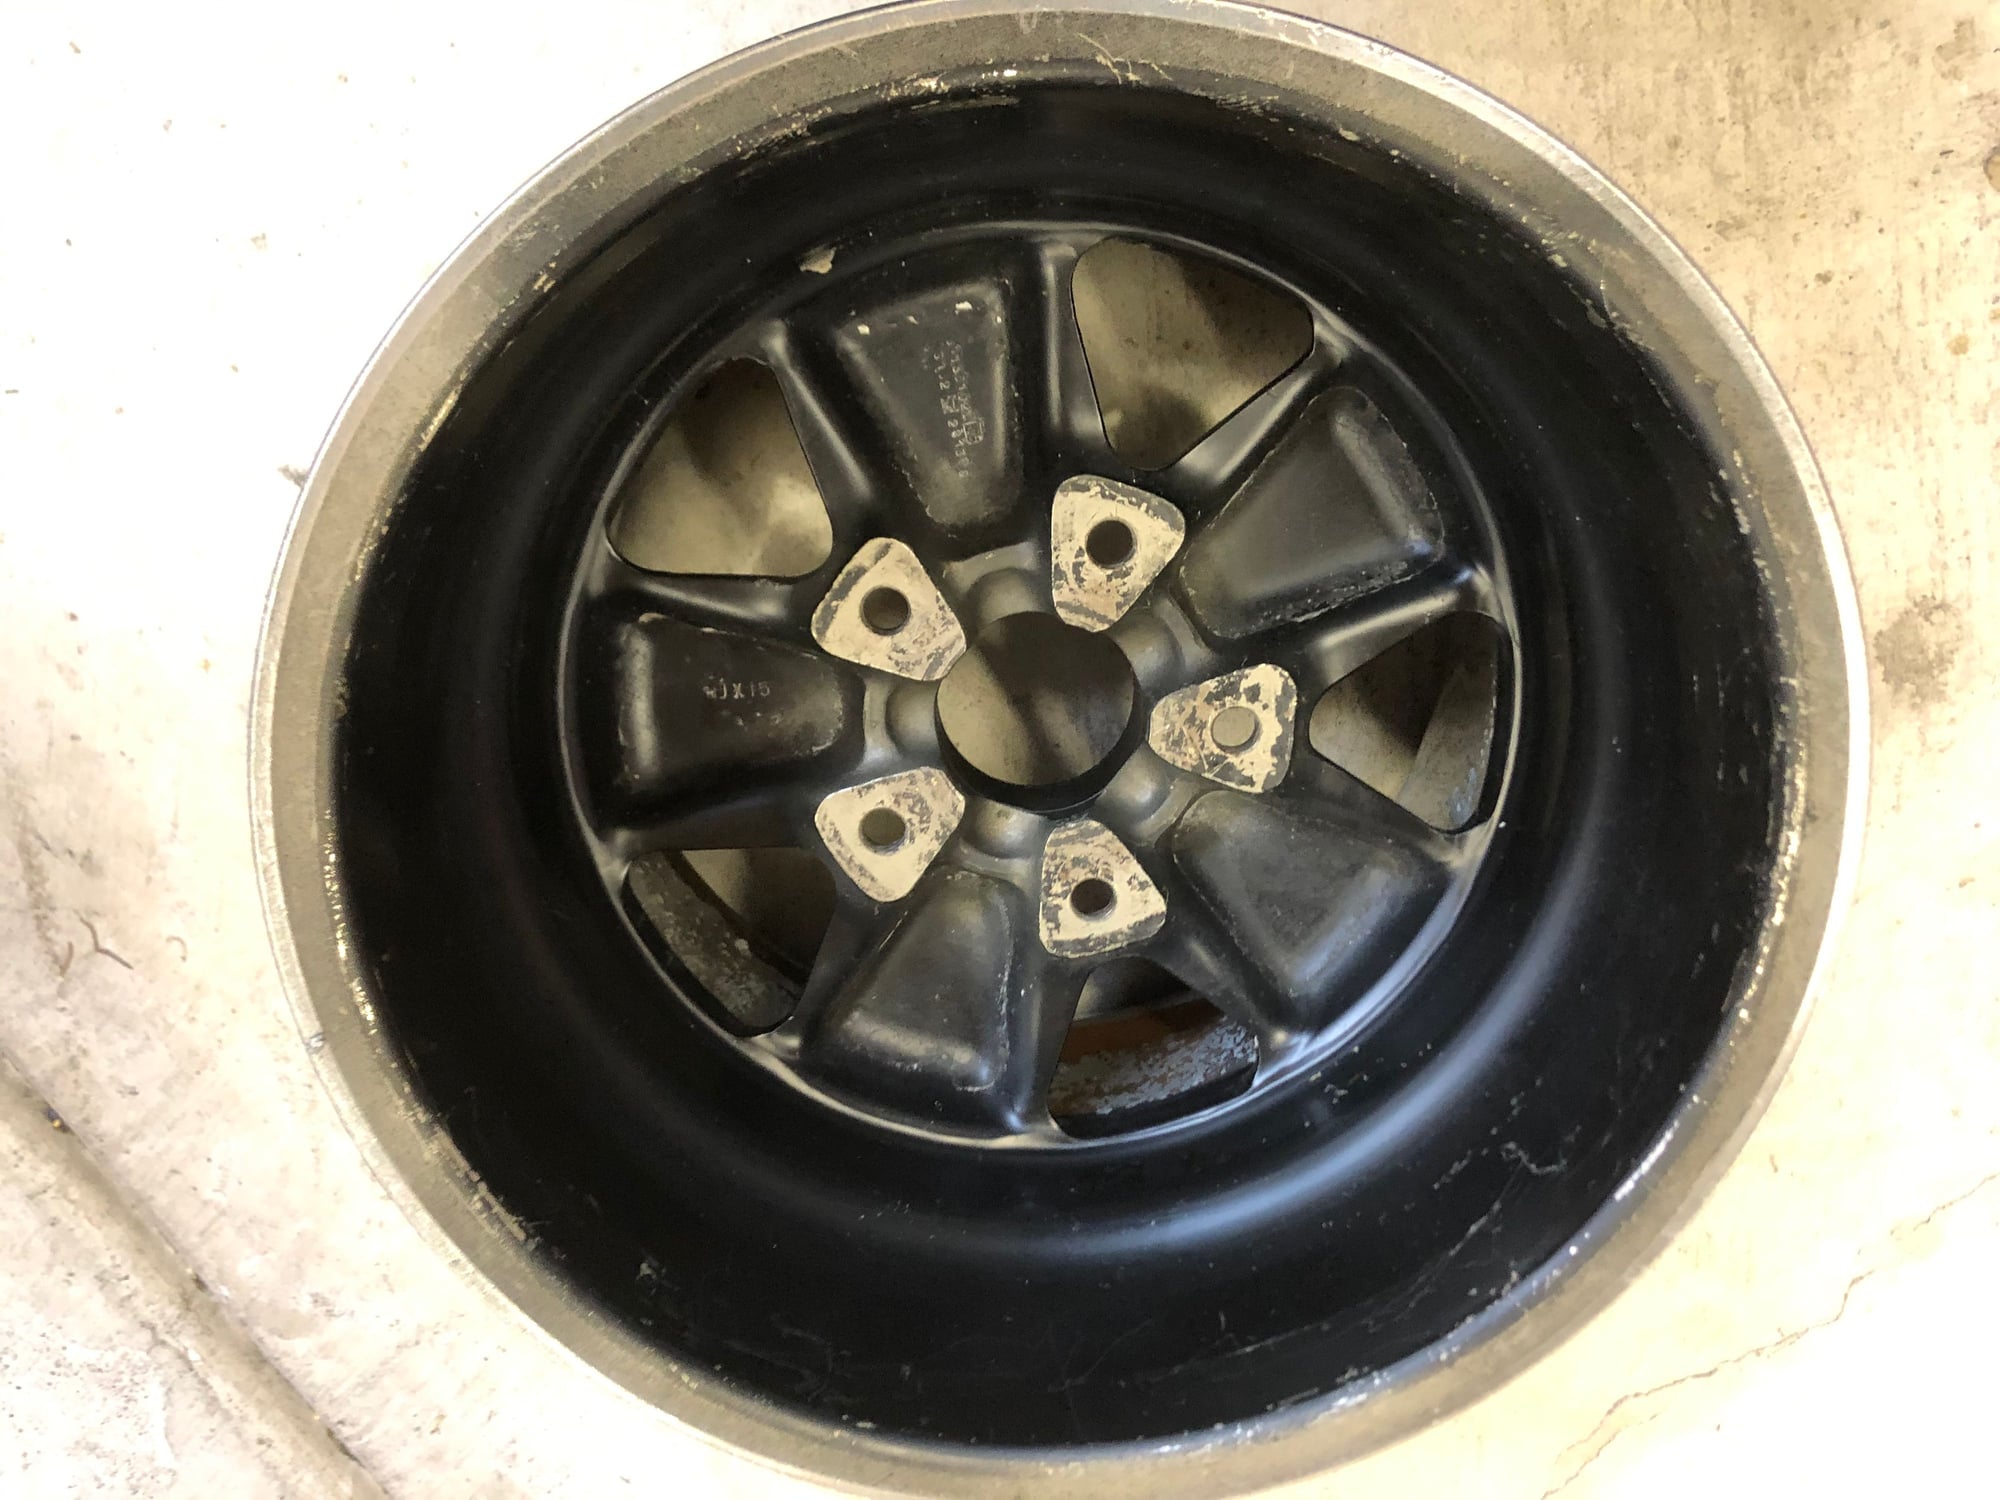 Wheels and Tires/Axles - Original 1973 RSR wheel (1only) - Used - 1973 Porsche 911 - Phoenix, AZ 85032, United States